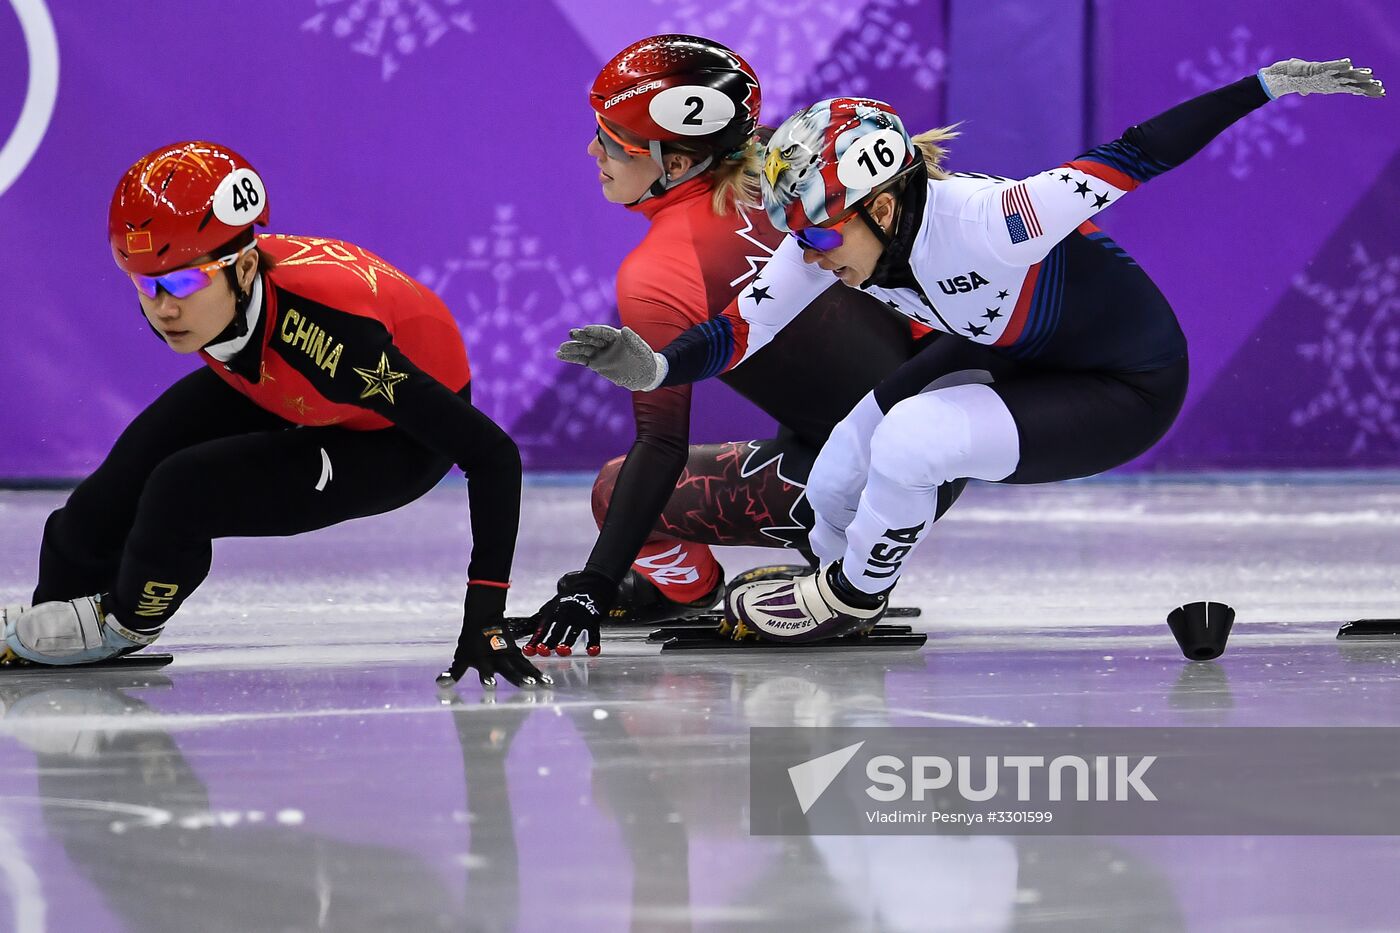 2018 Winter Olympics. Short track speed skating. Day three